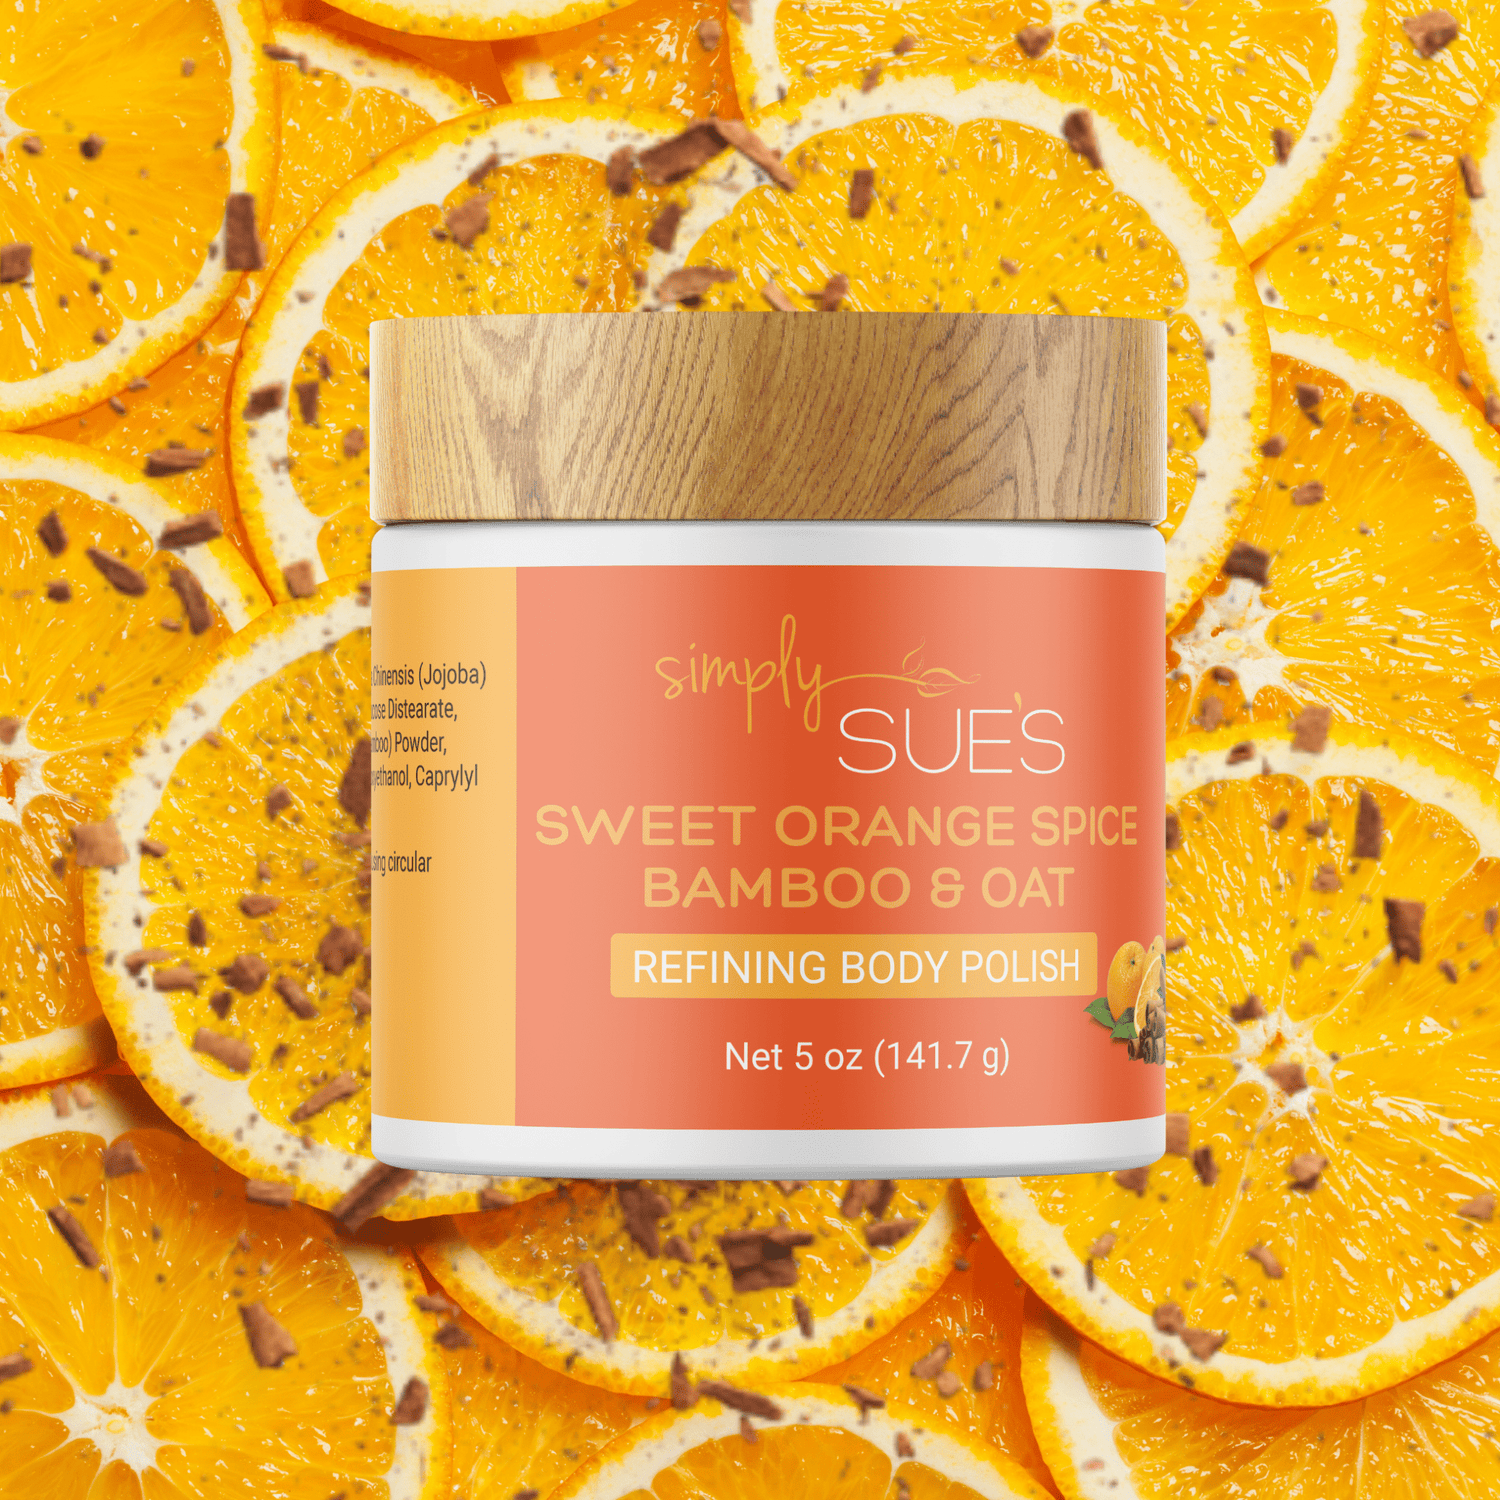 Sweet Orange Spice Body Polish from Simply Sue&